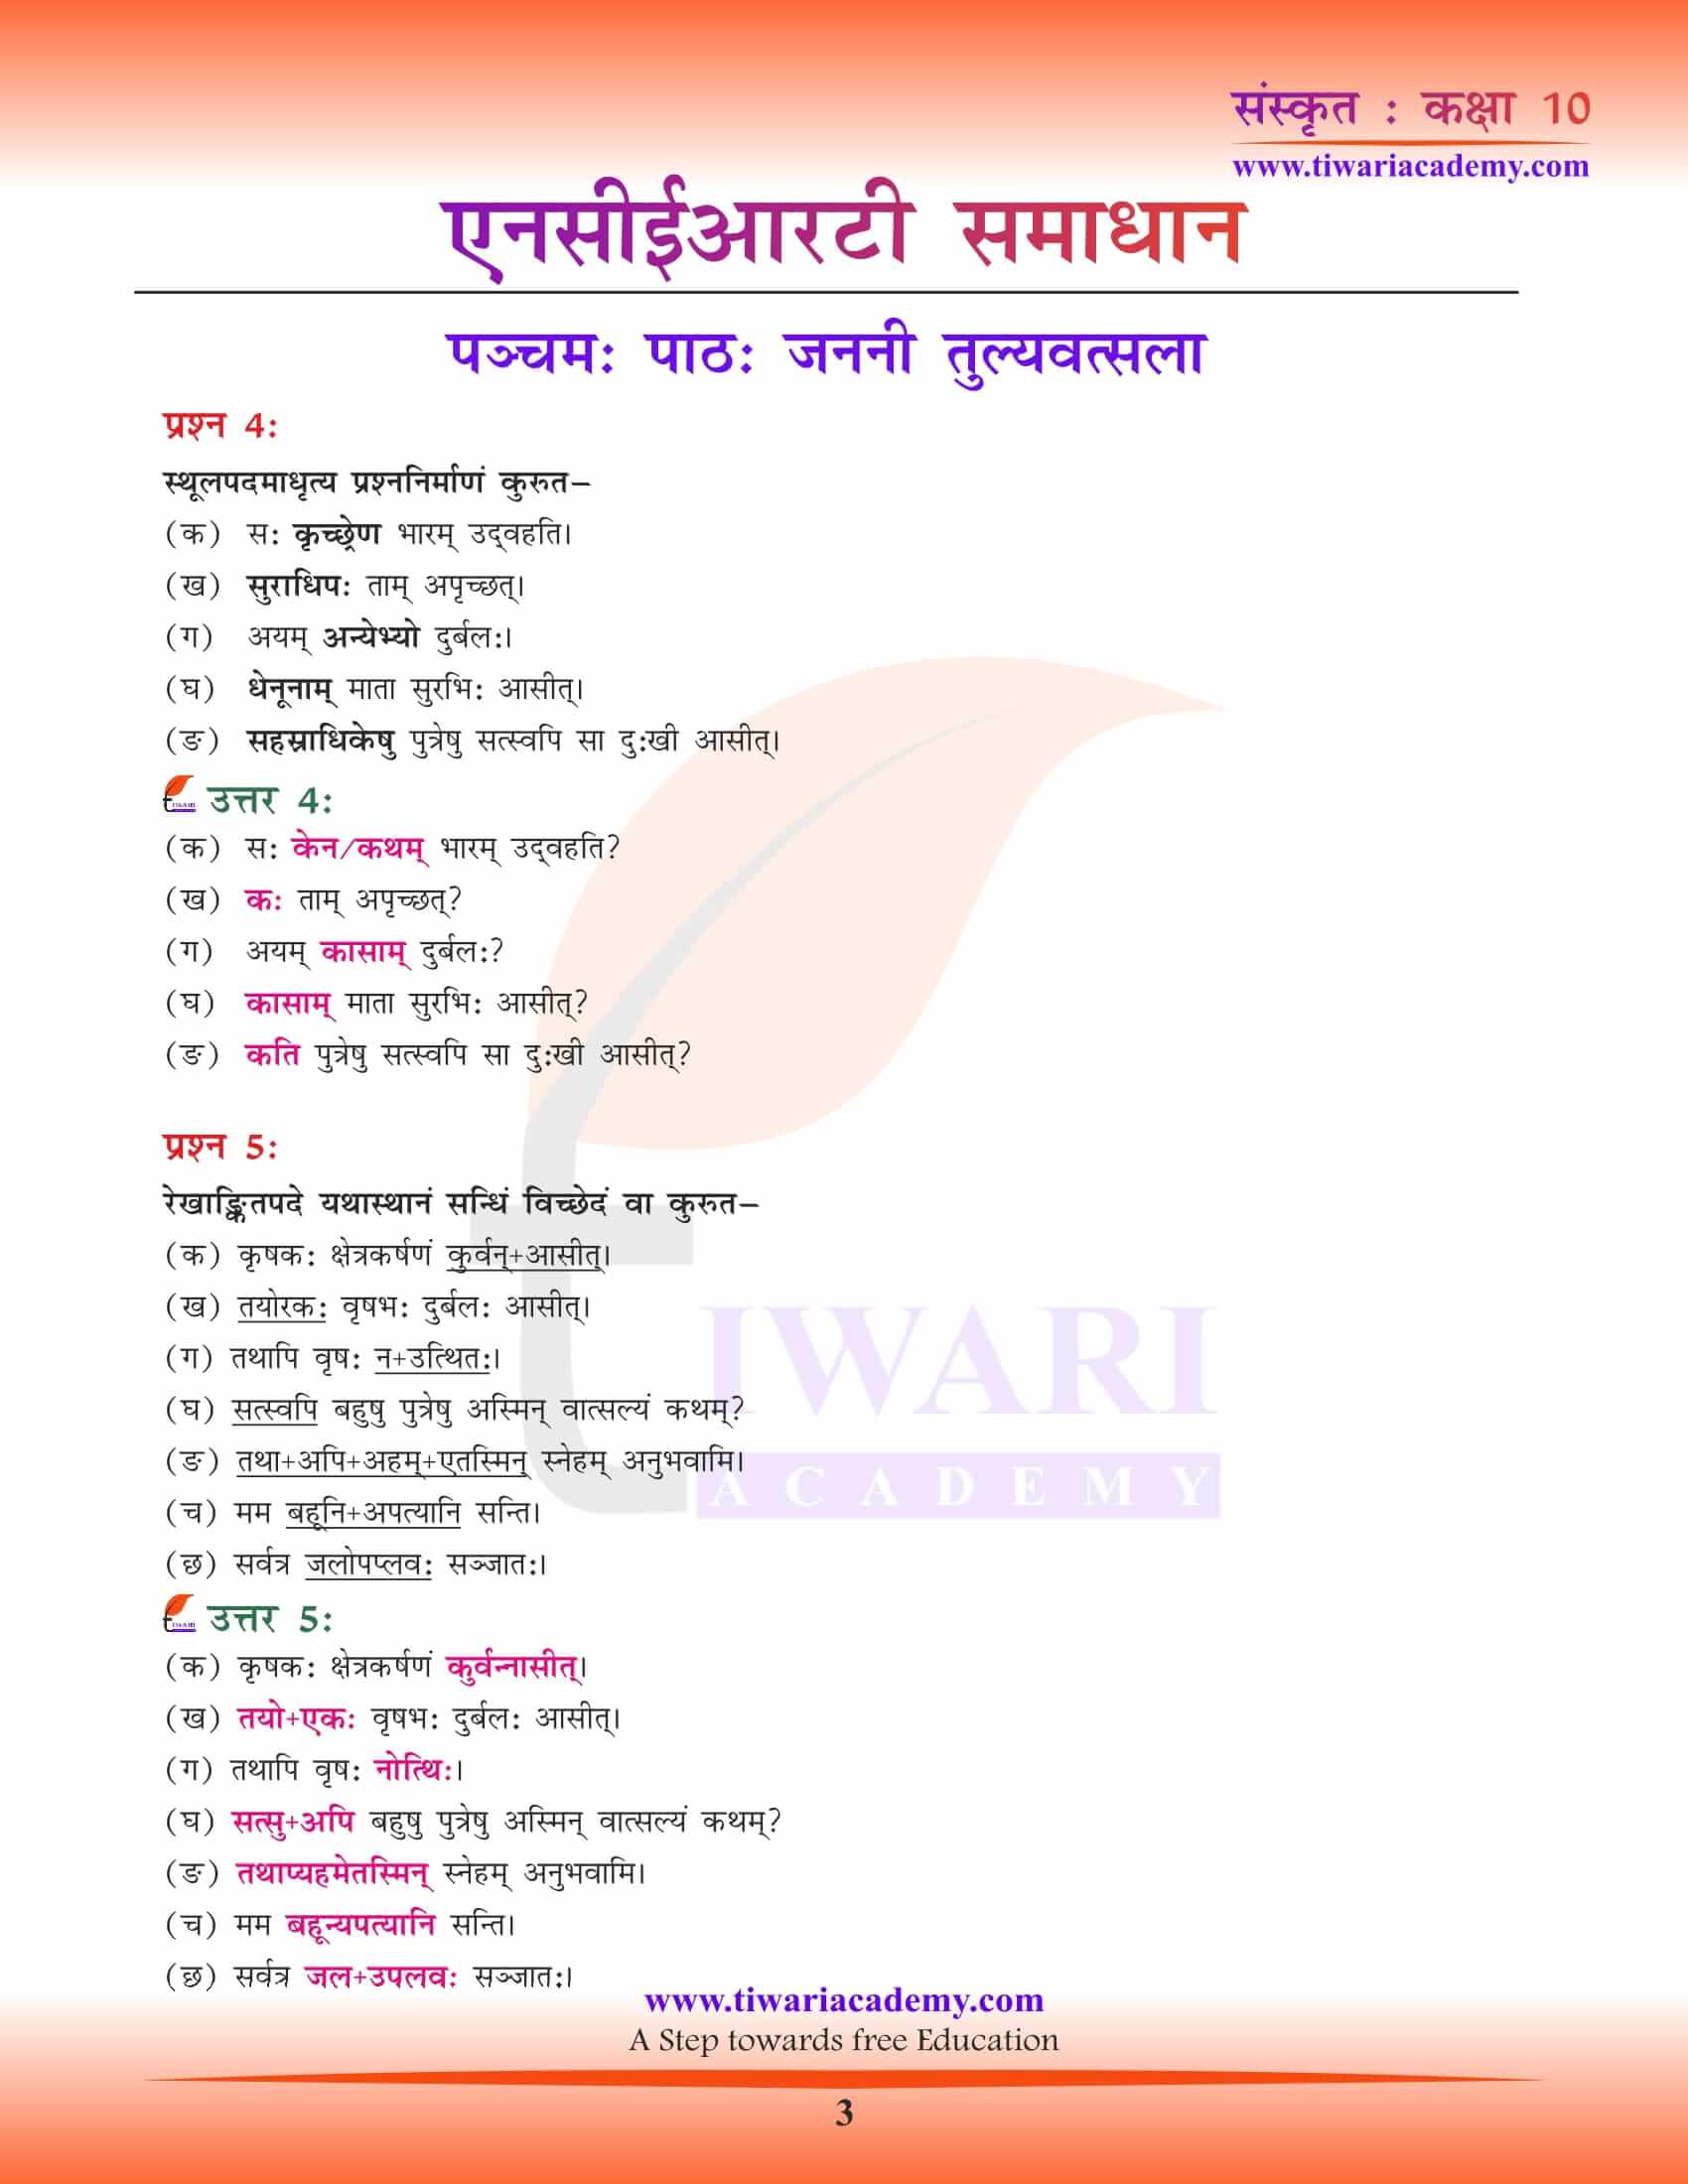 NCERT Solutions for Class 10 Sanskrit chapter 5 in Hindi